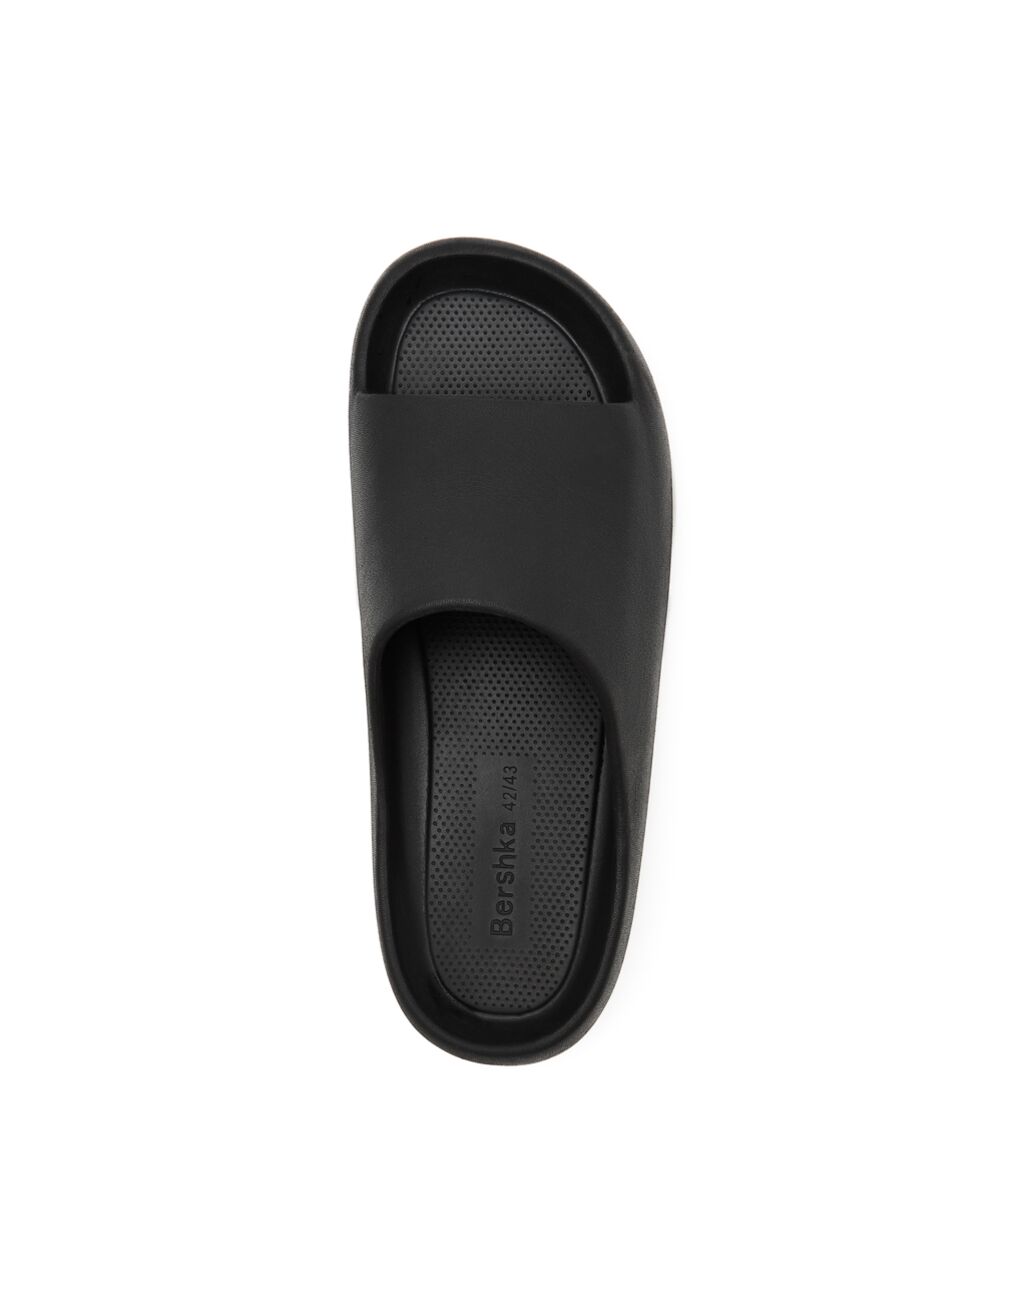 Men’s textured flat sandals